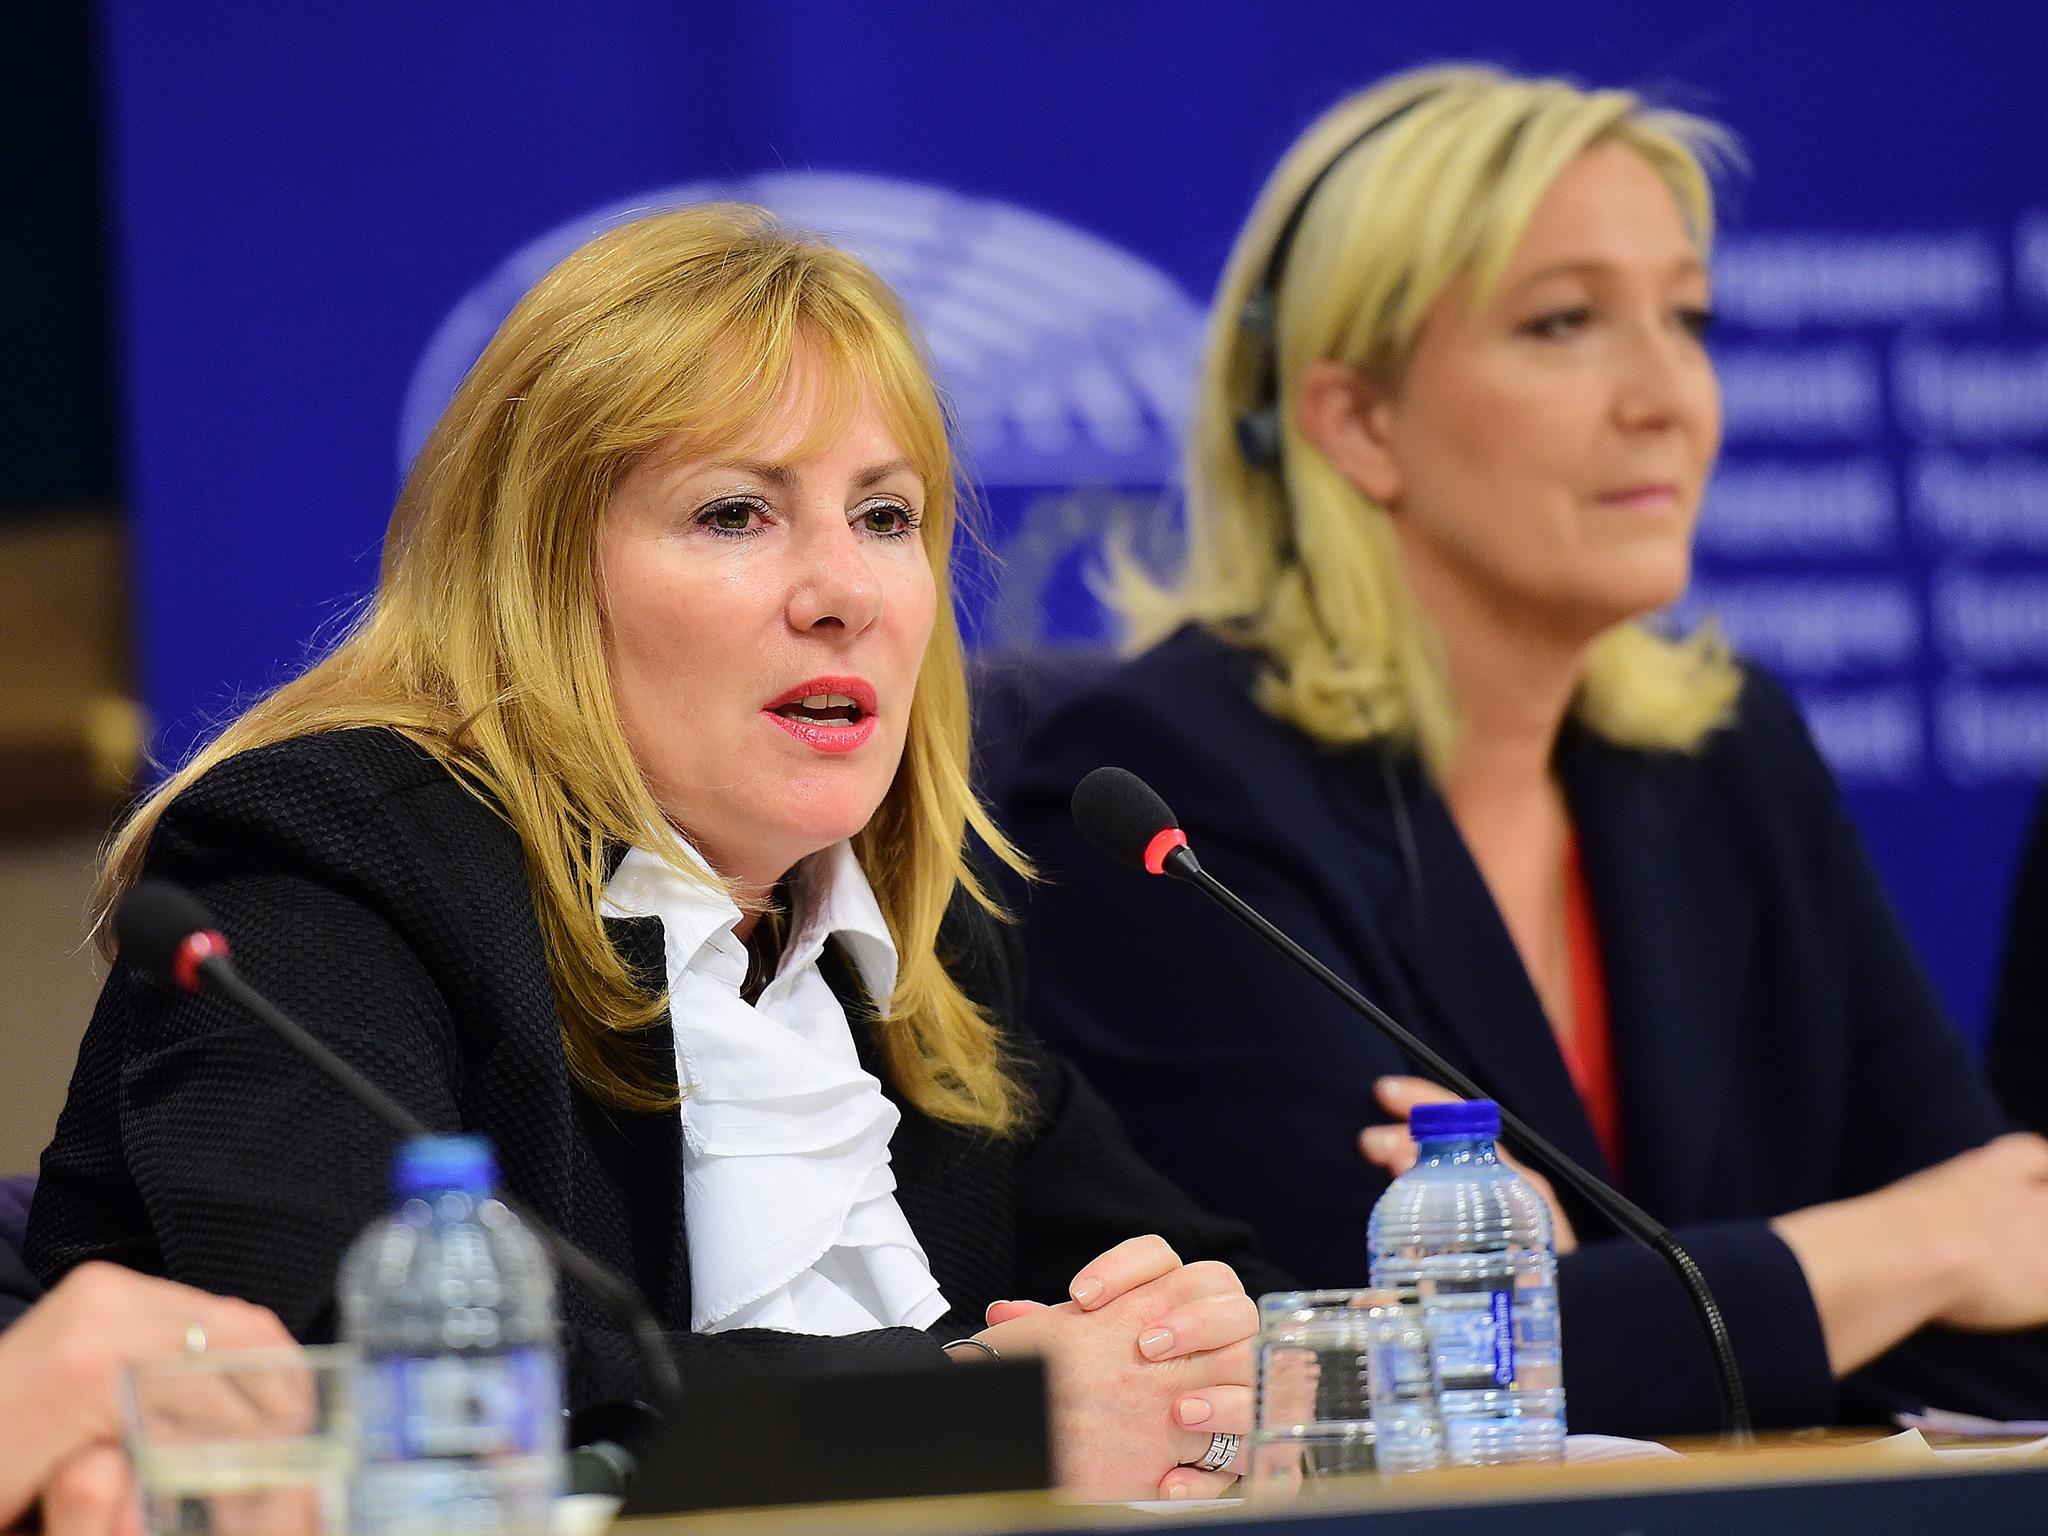 Janice Atkinson appears alongside Marine Le Pen